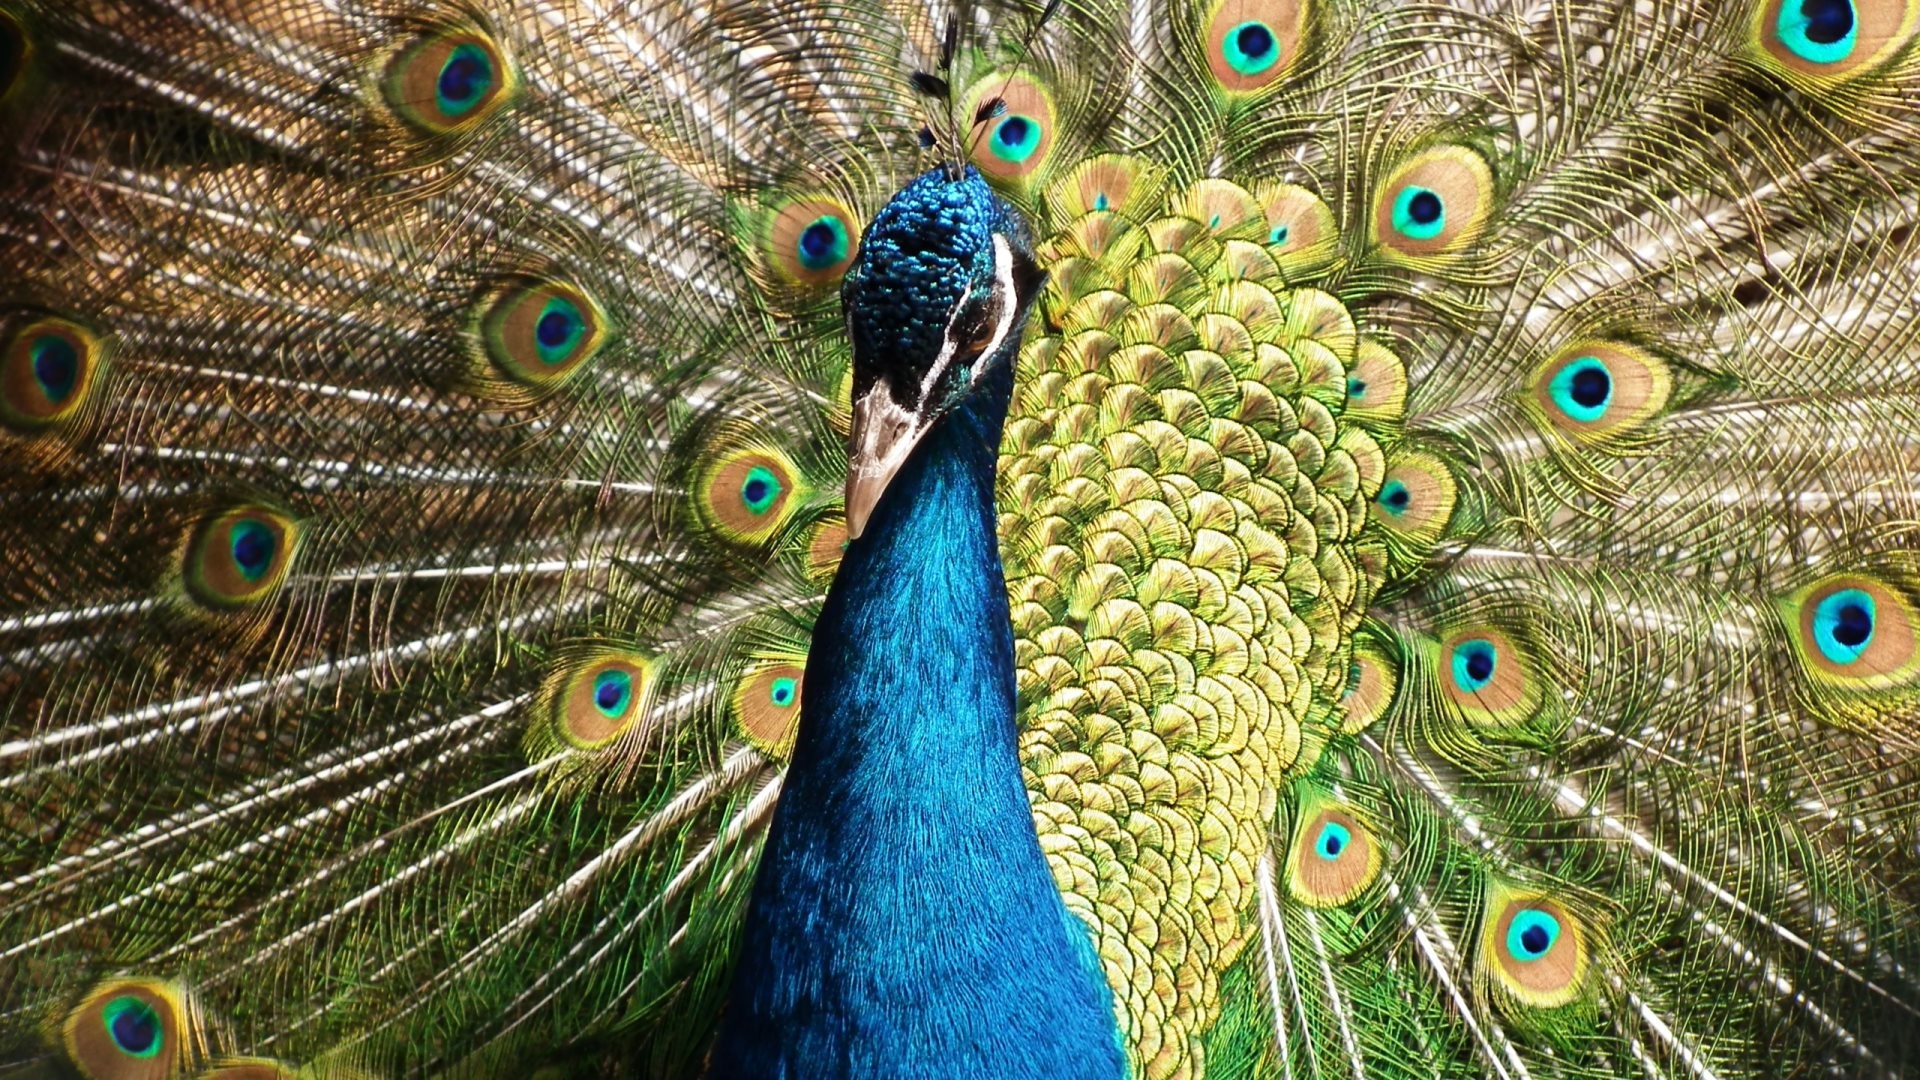 1920x1080 Wallpaper: Peacock. High Definition HD 